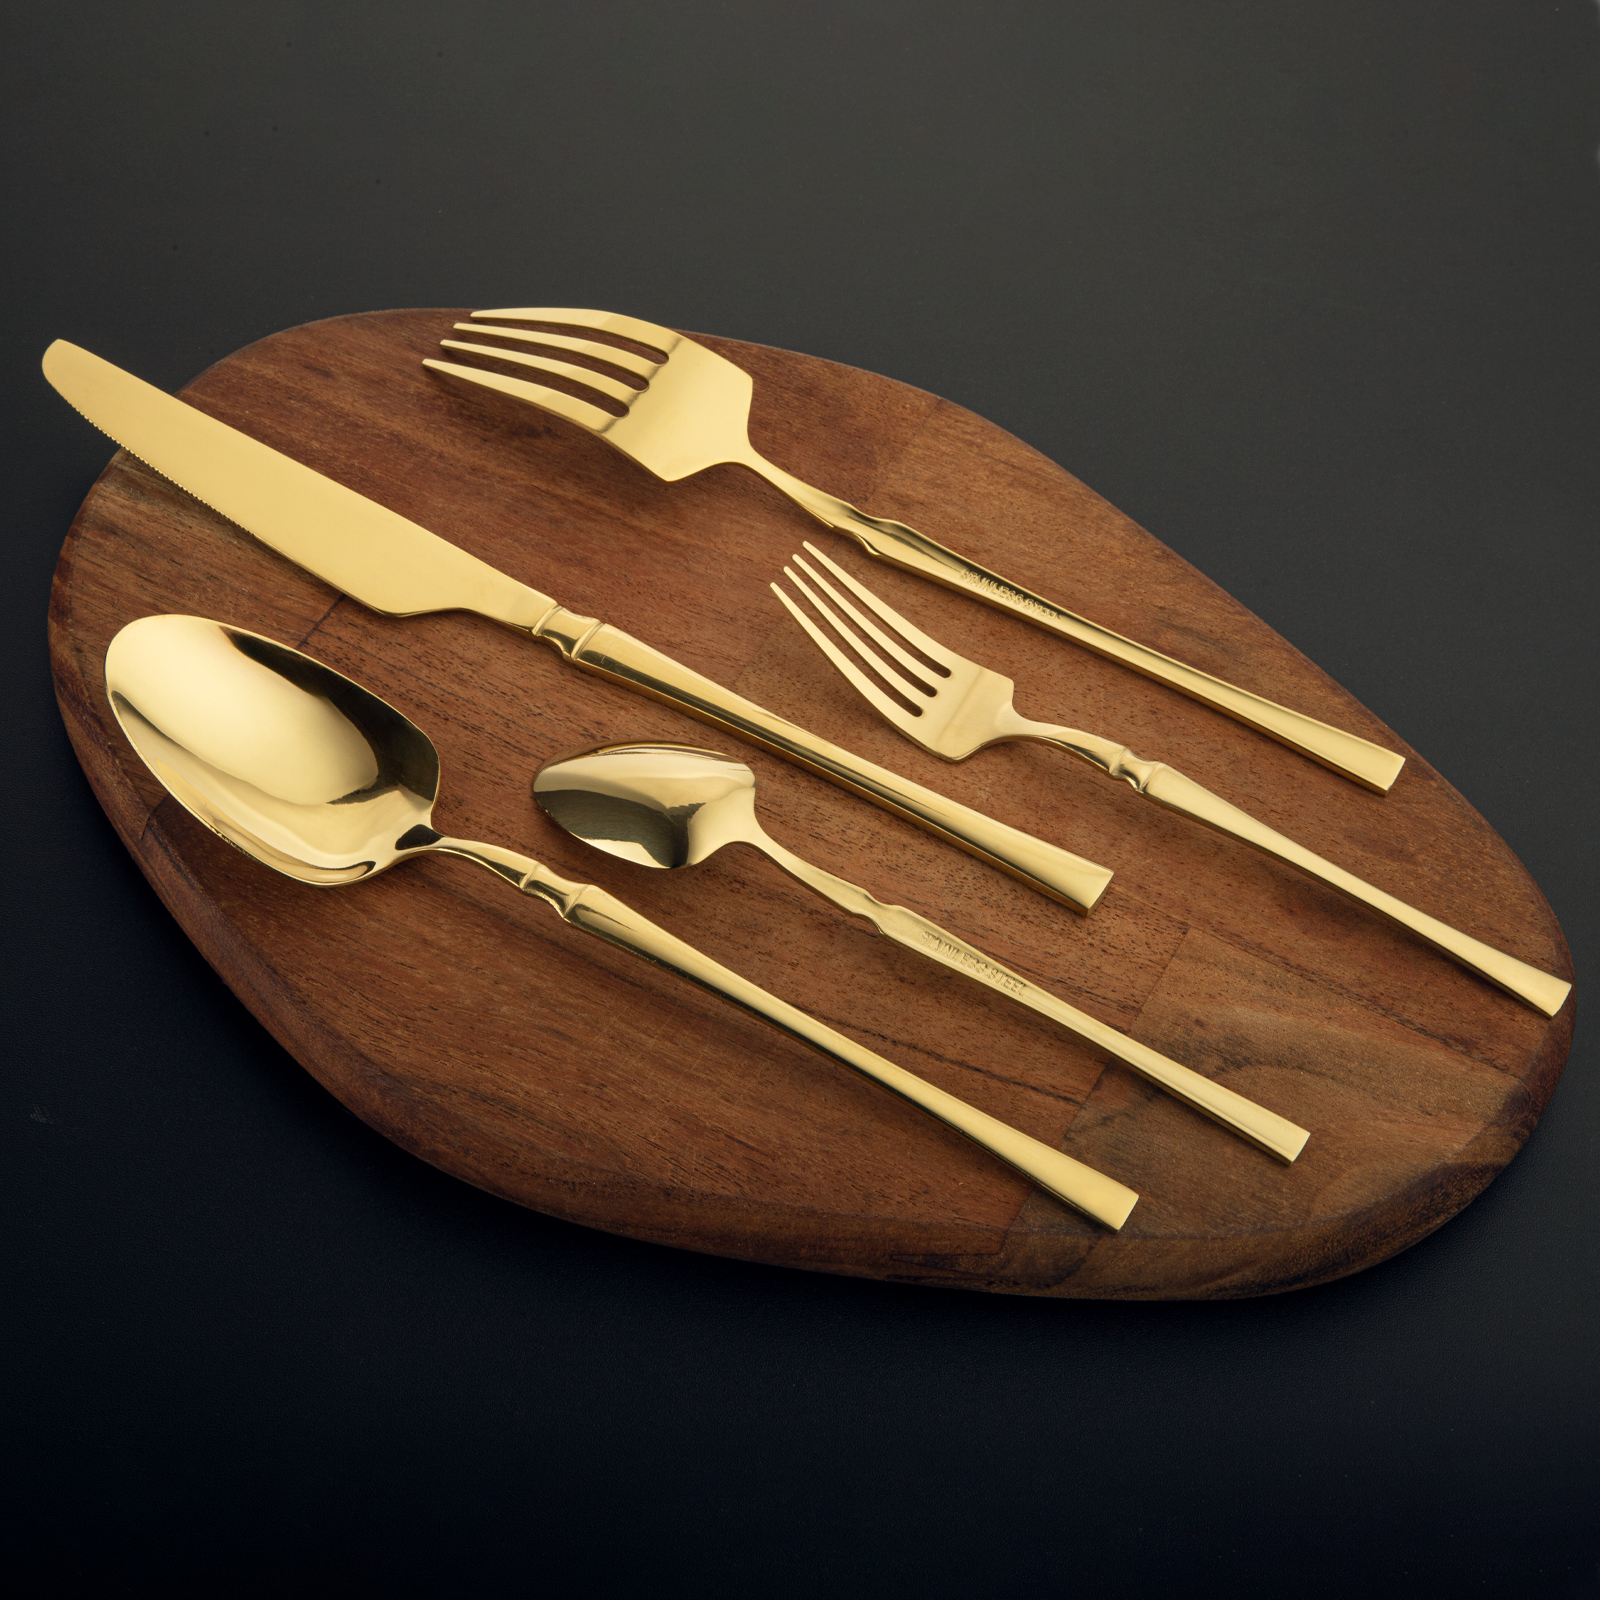  Cutlery Set Stainless Steel 30PCS Knife Dinner Salad Fork Tea Spoon Gold